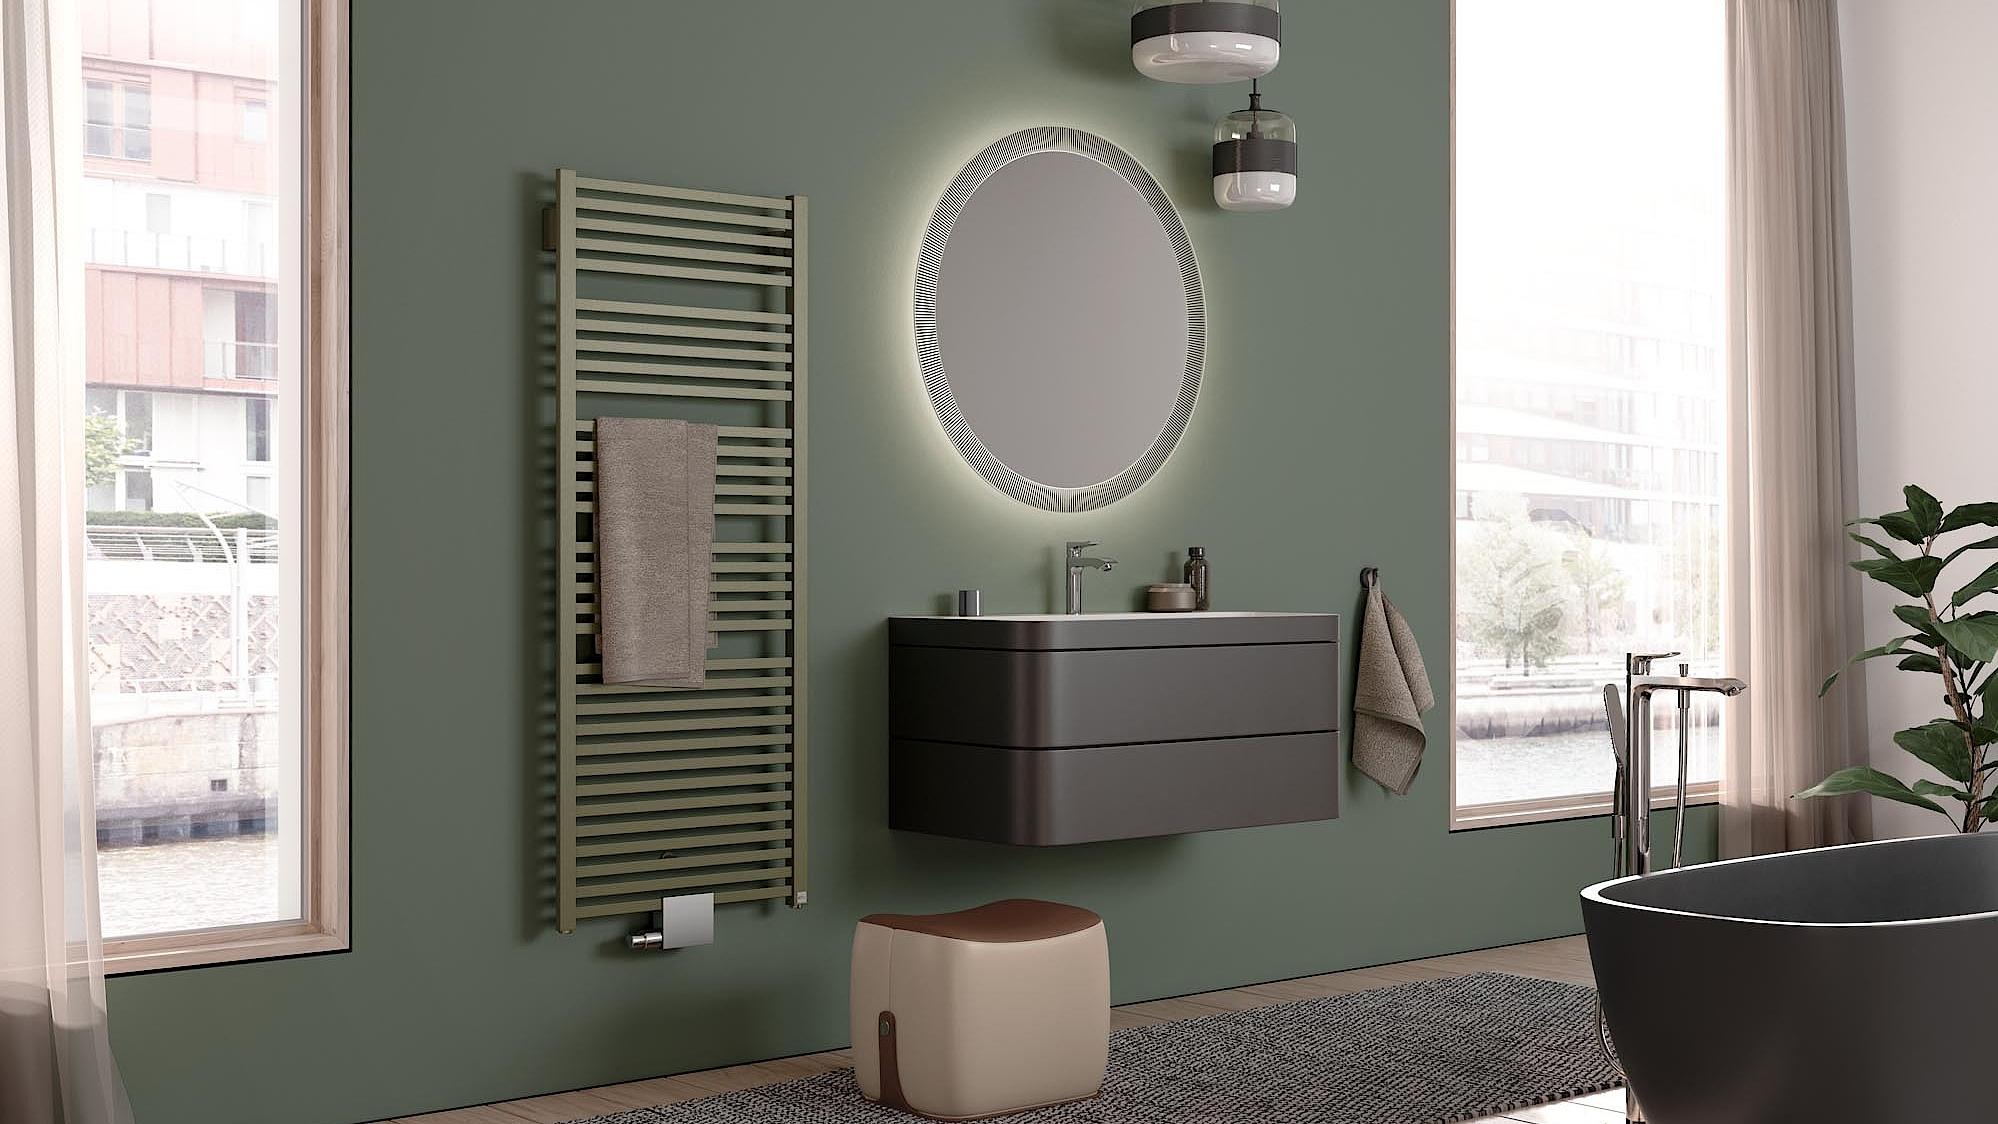 Kermi Geneo quadris designer and bathroom radiators – unusually shaped elements, attractive appearance.